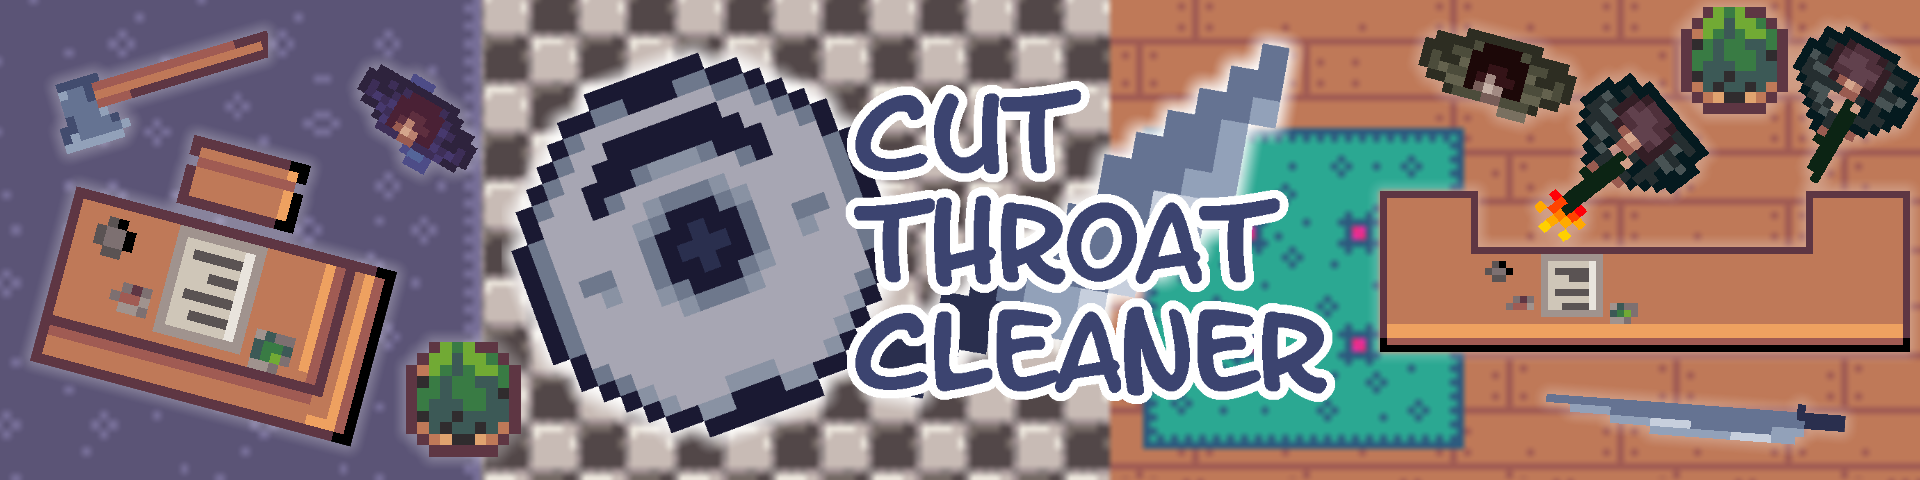 Cut-Throat Cleaner